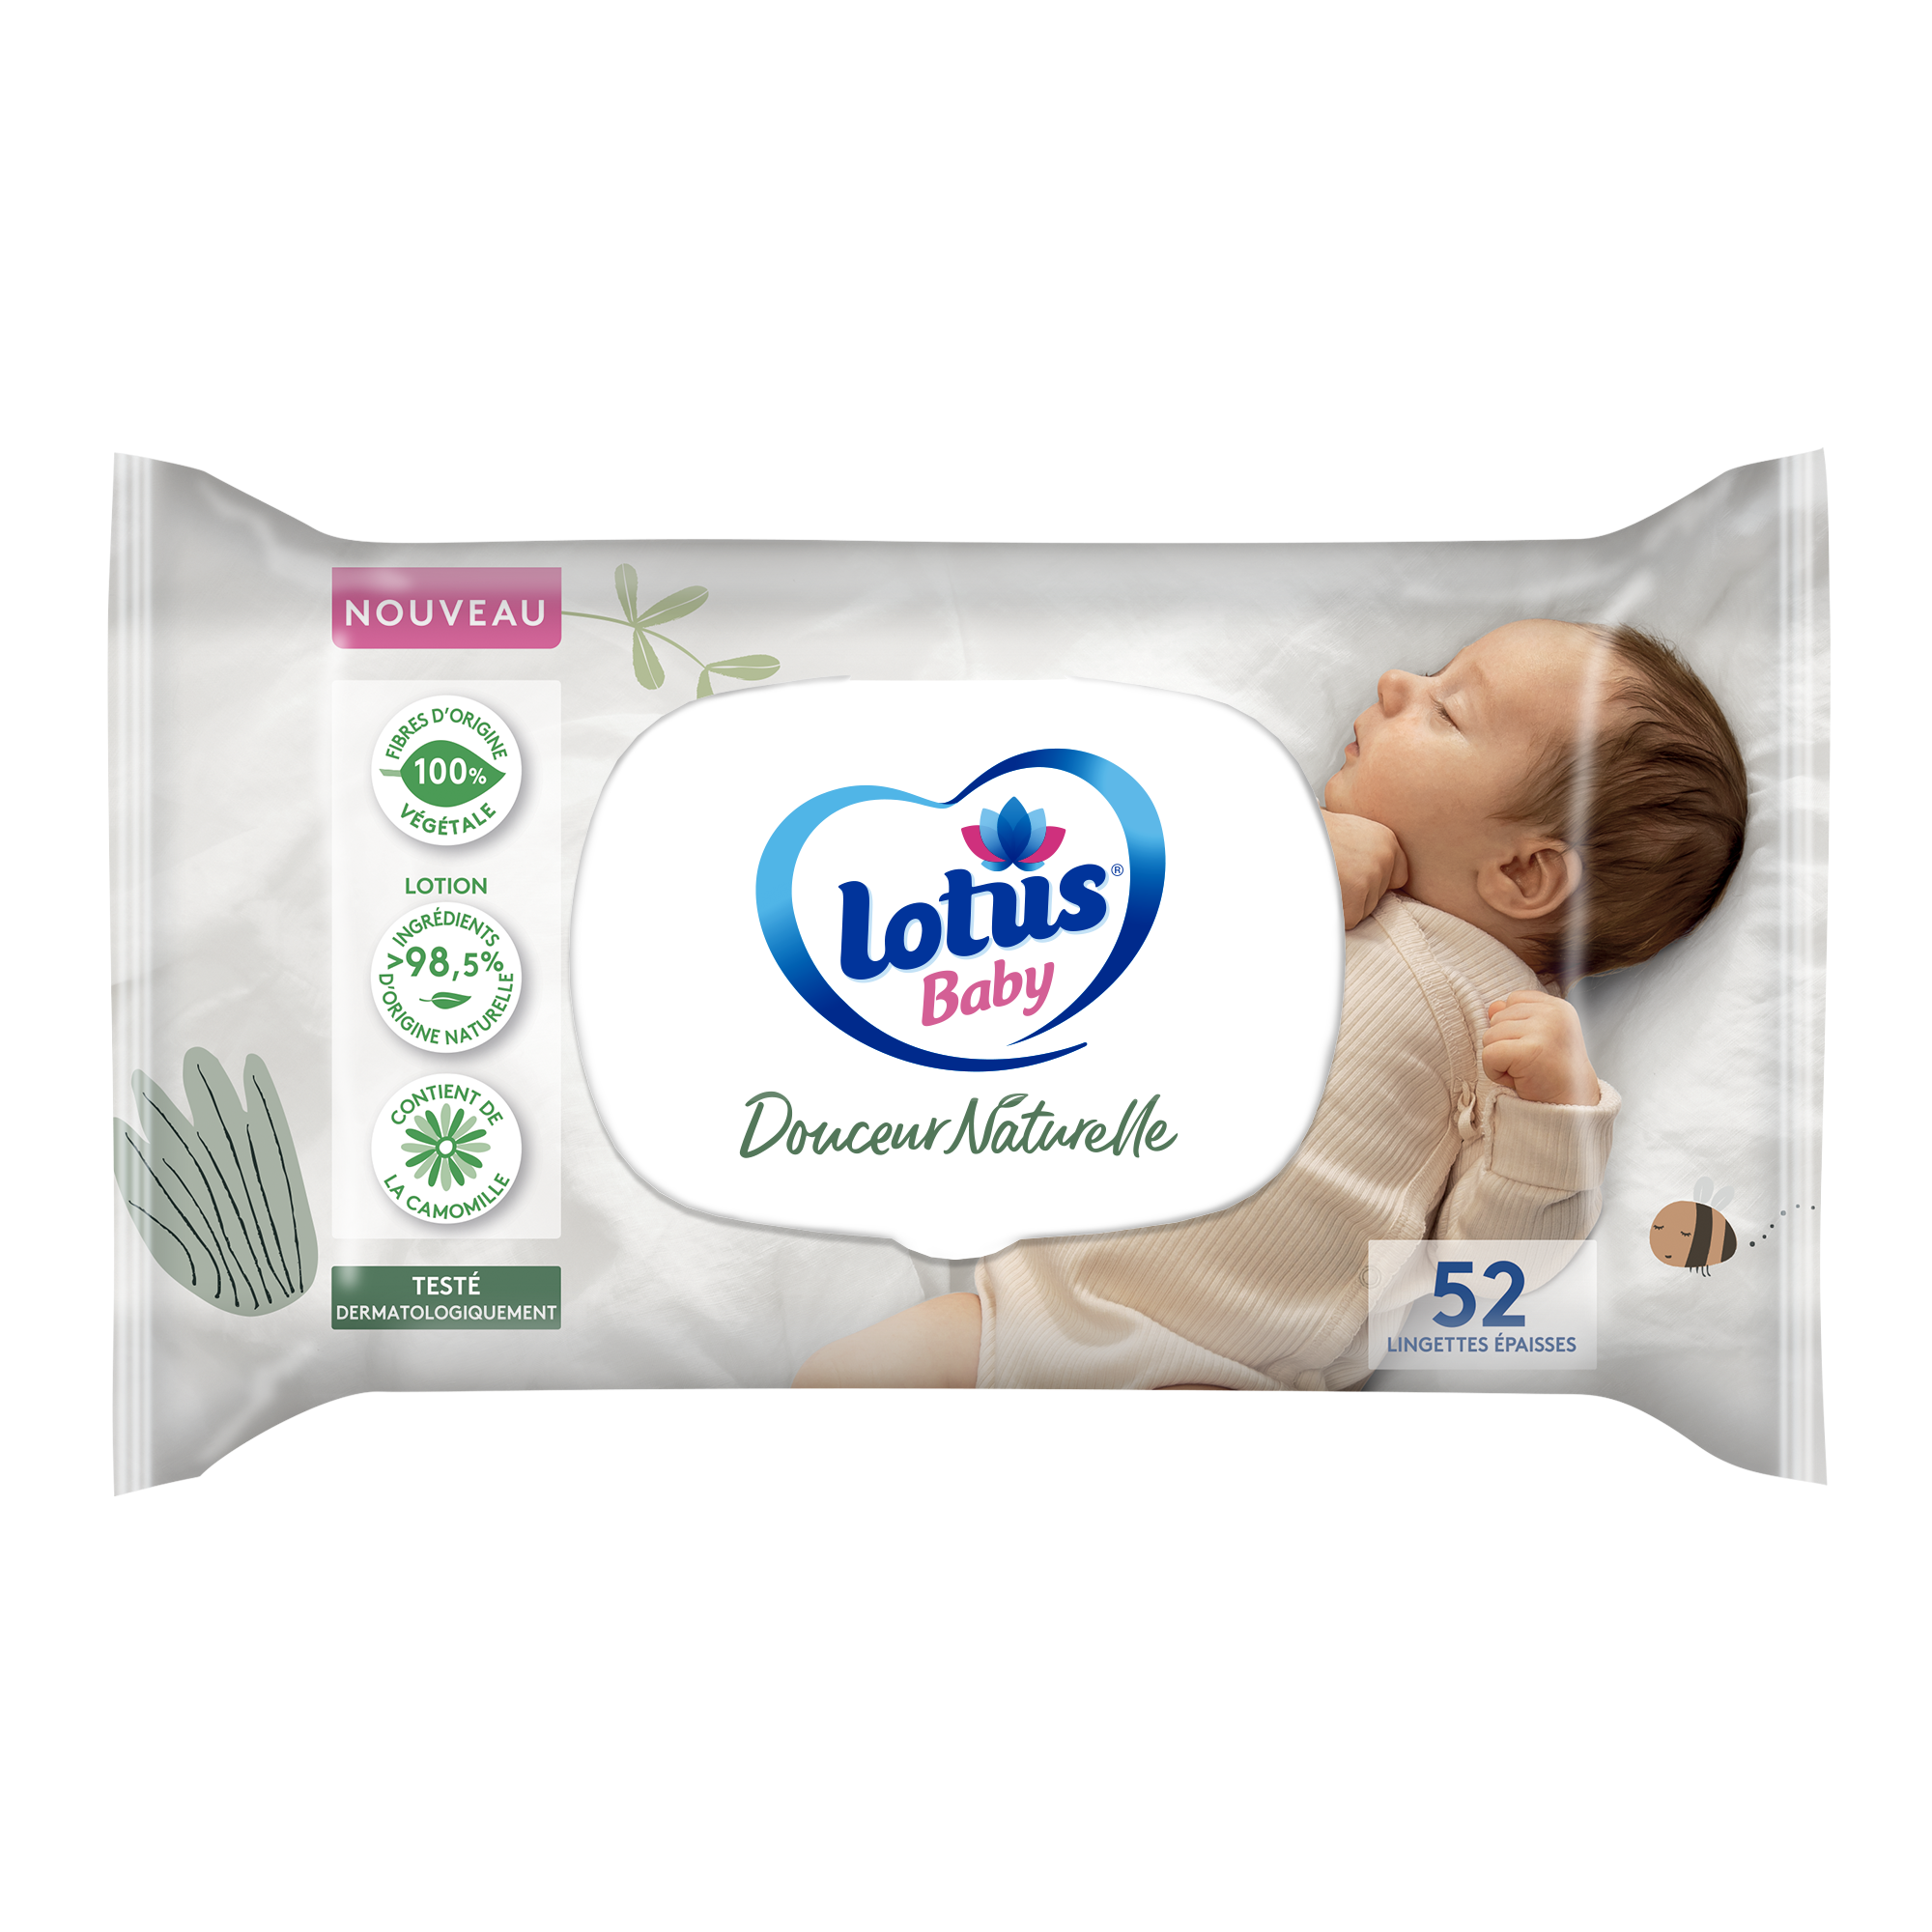 Les taratatas de Sandra: Couches Douceur Naturelle Lotus Baby!!!